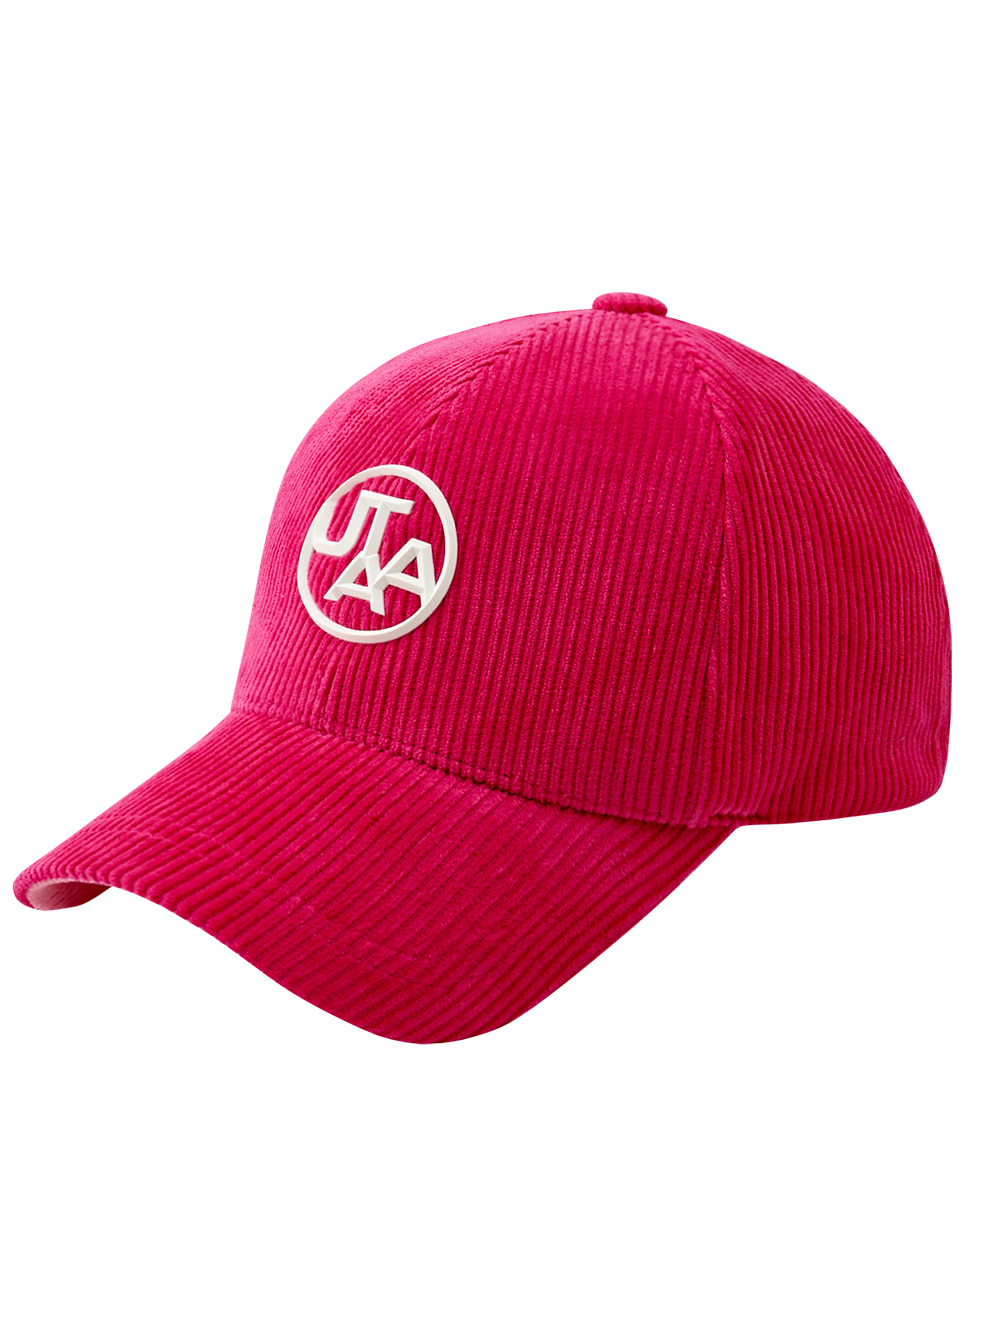 UTAA Corduroy Figure Symbol Cap : Pink (UB4GCU210PK)